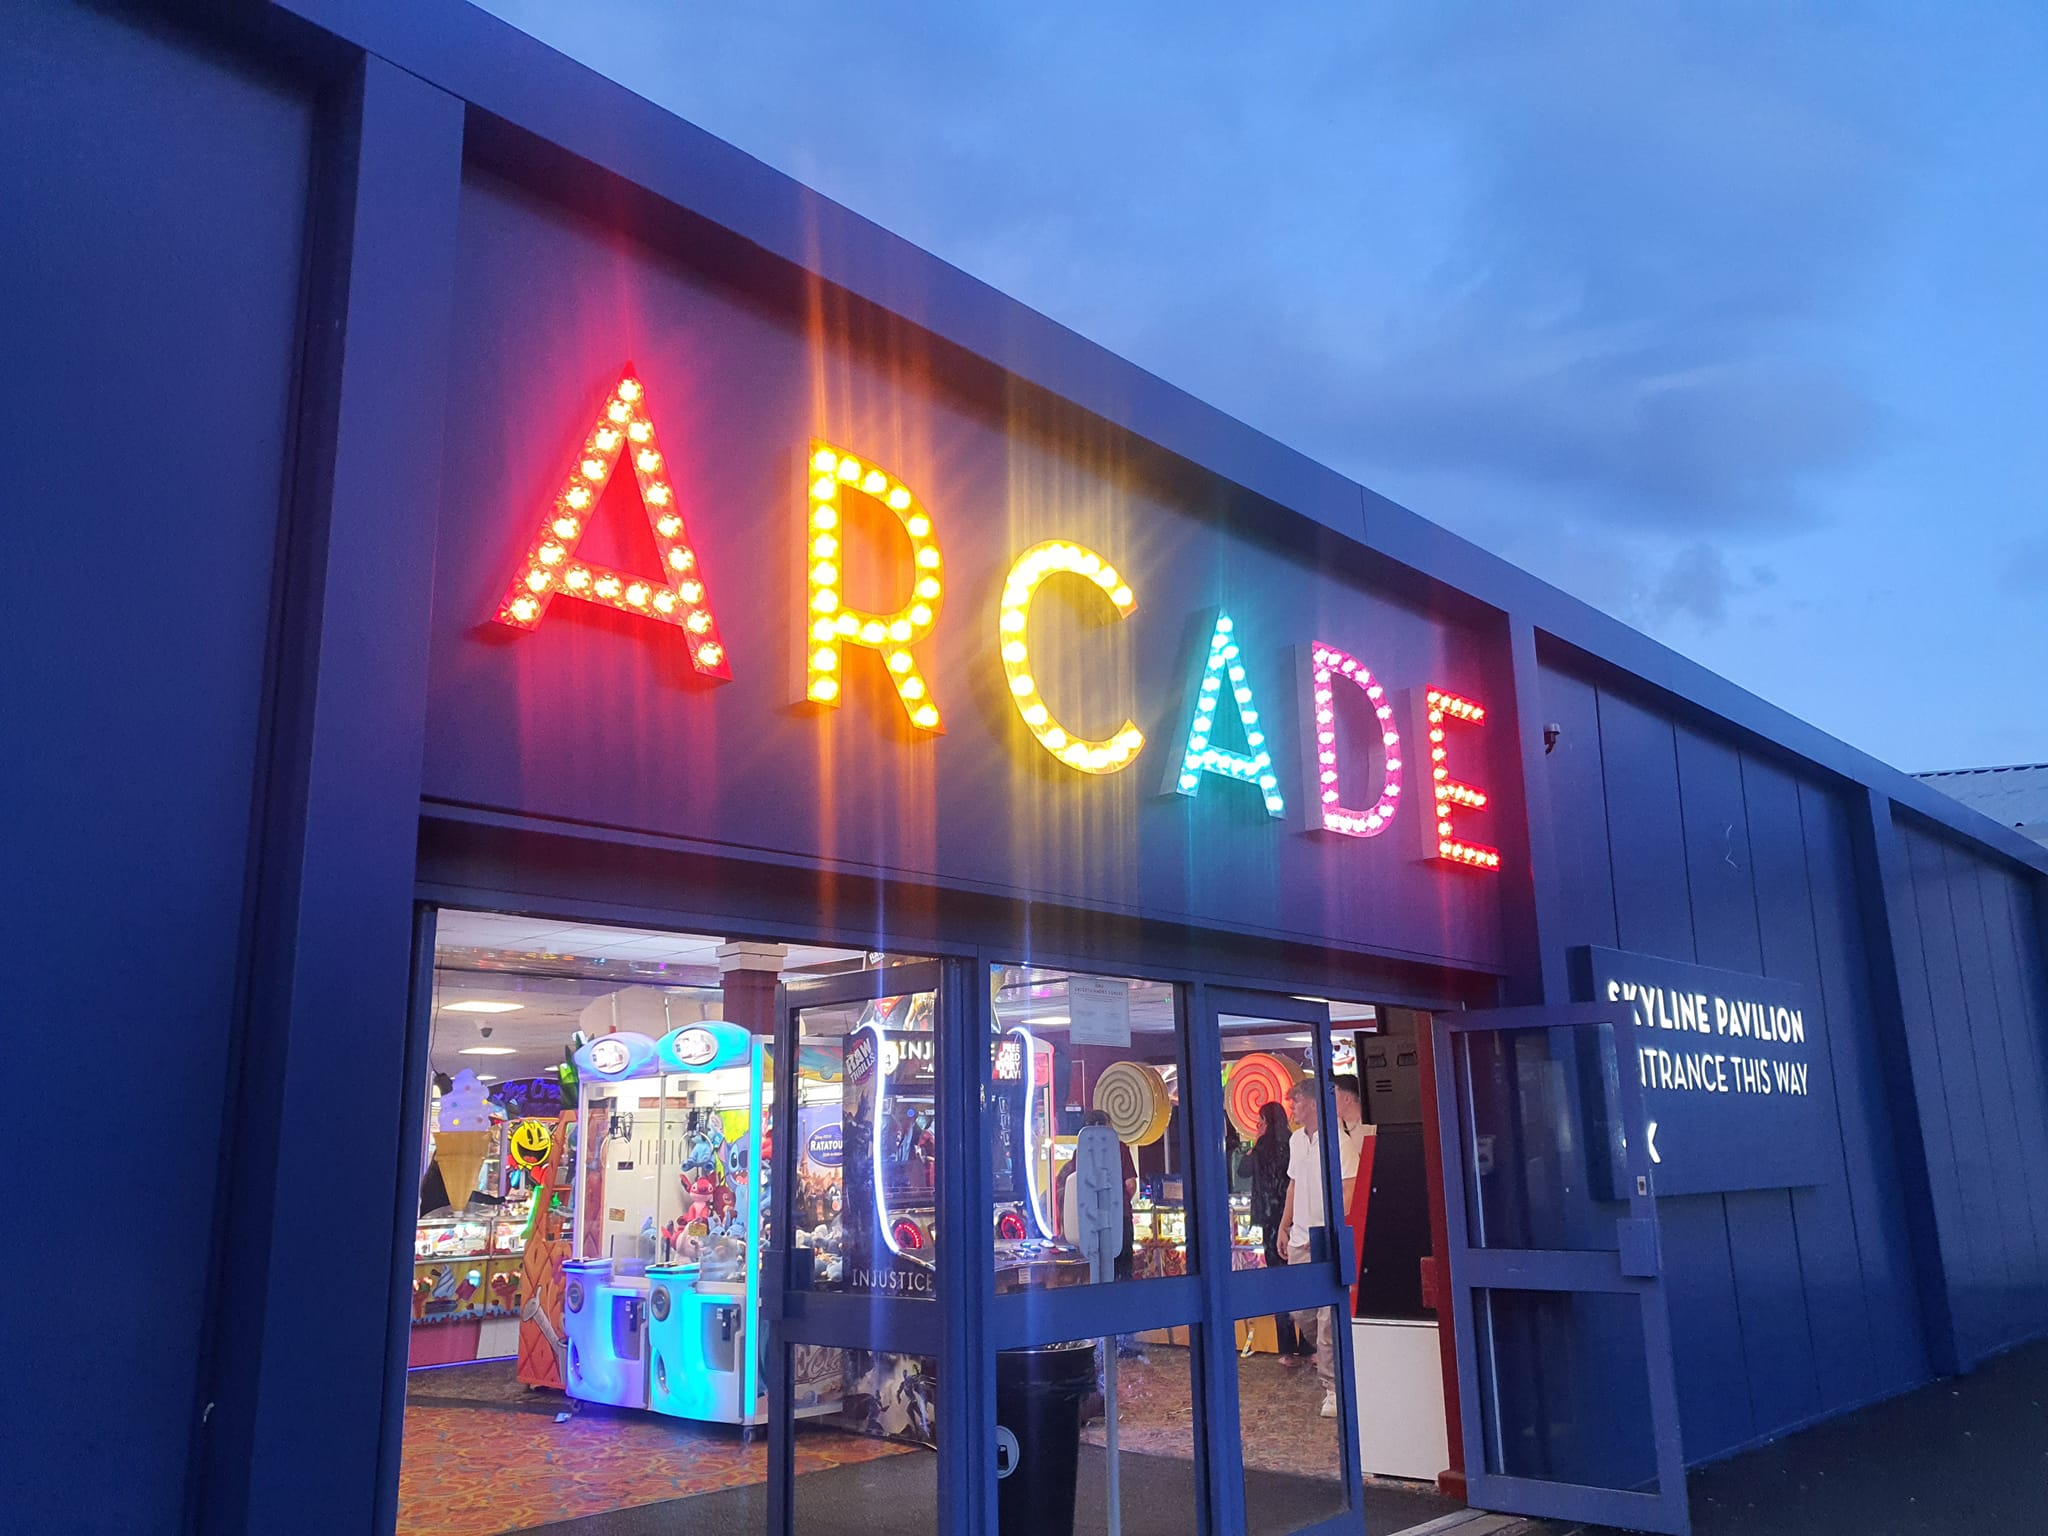 Arcade